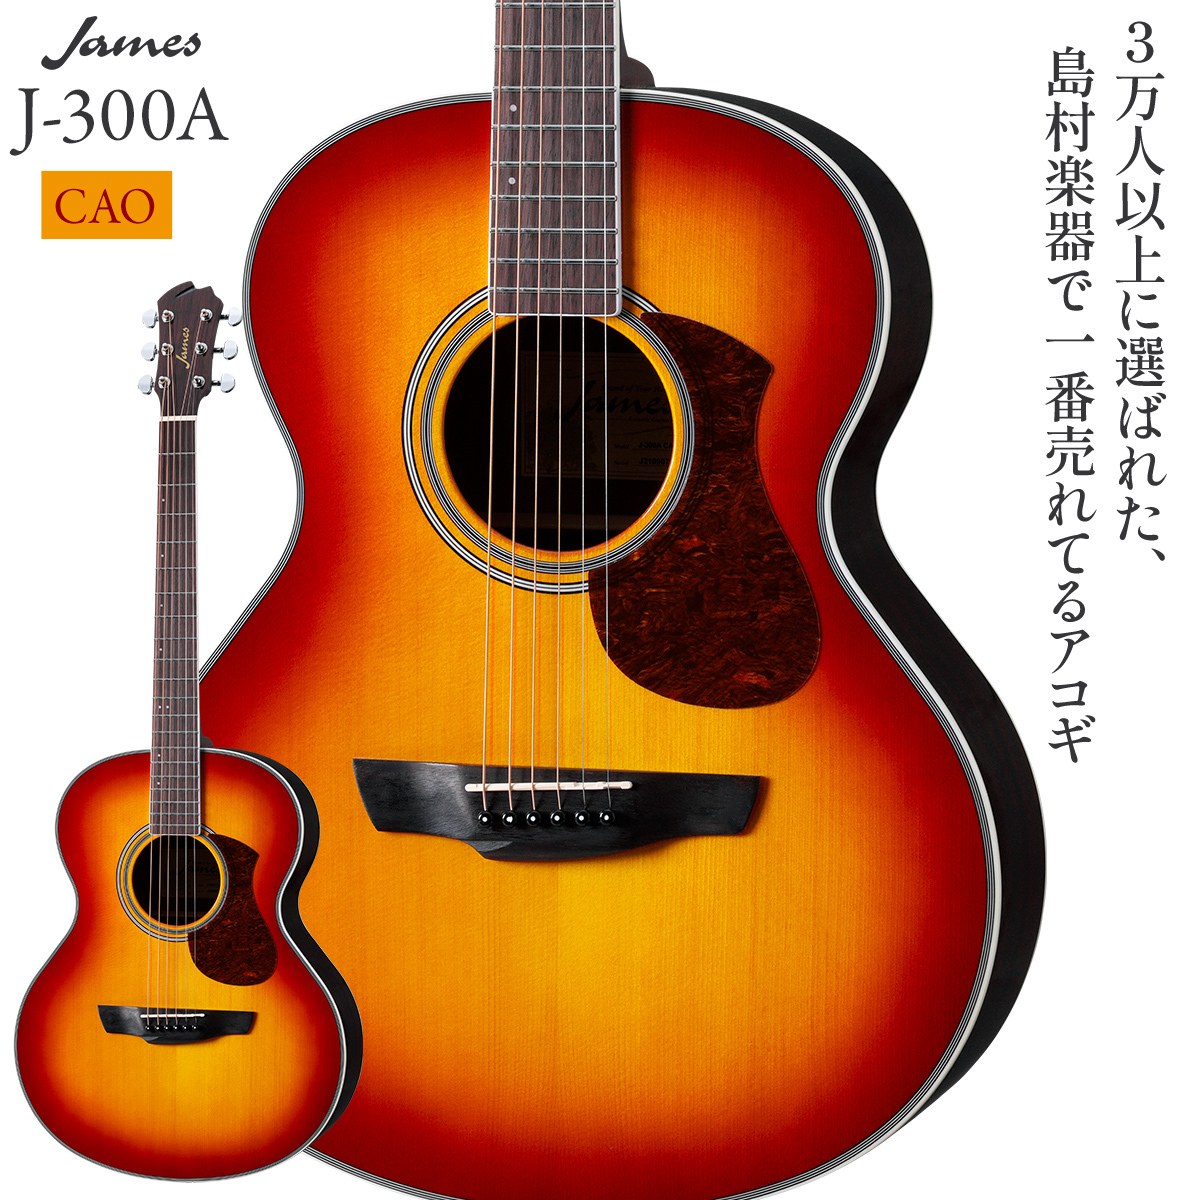 James J-300A CAO (カリビアンオレンジ) アコースティックギター（新品